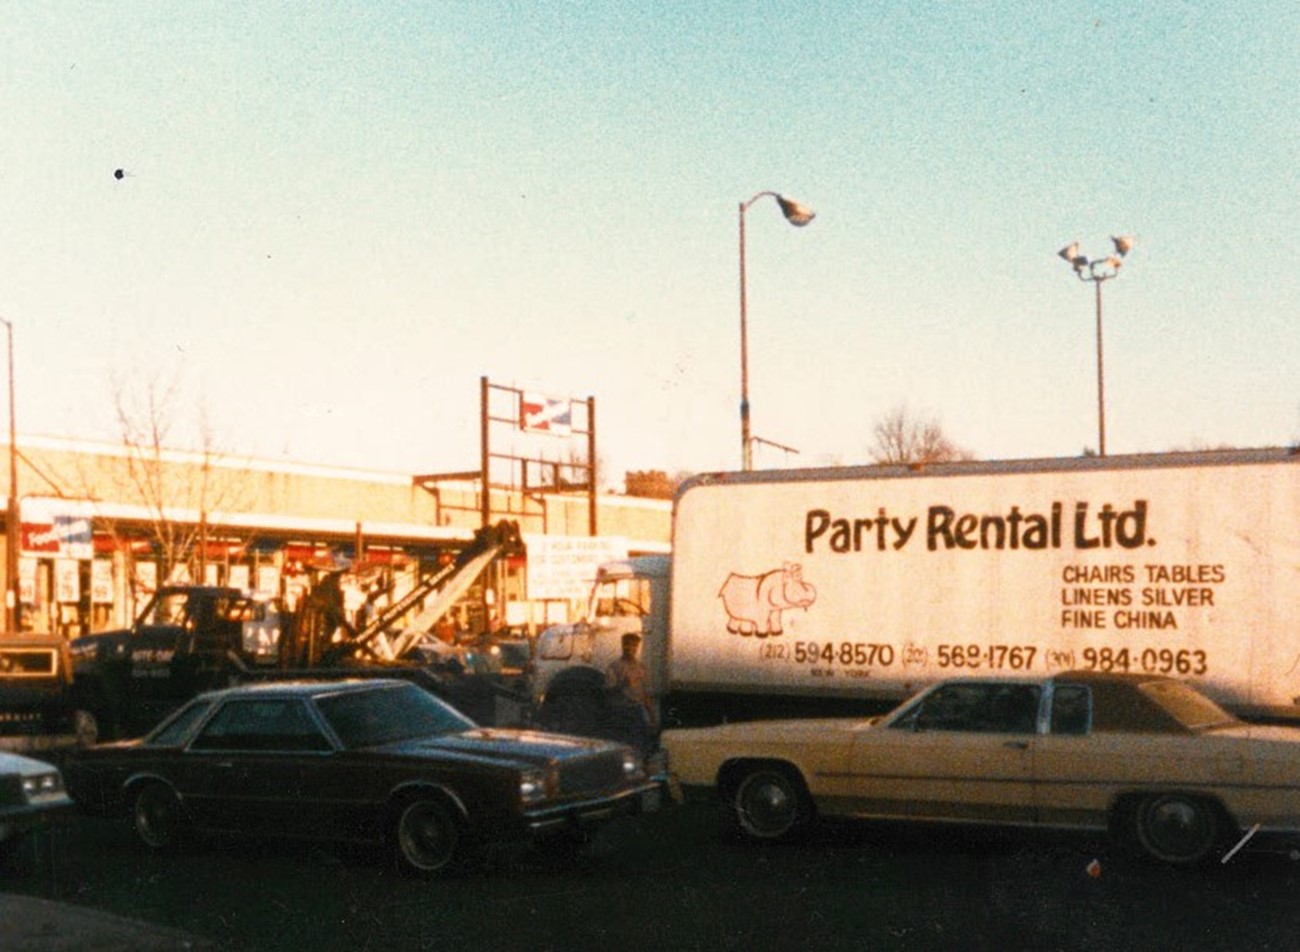 Party Rental Ltd. celebrates its golden anniversary – InTents